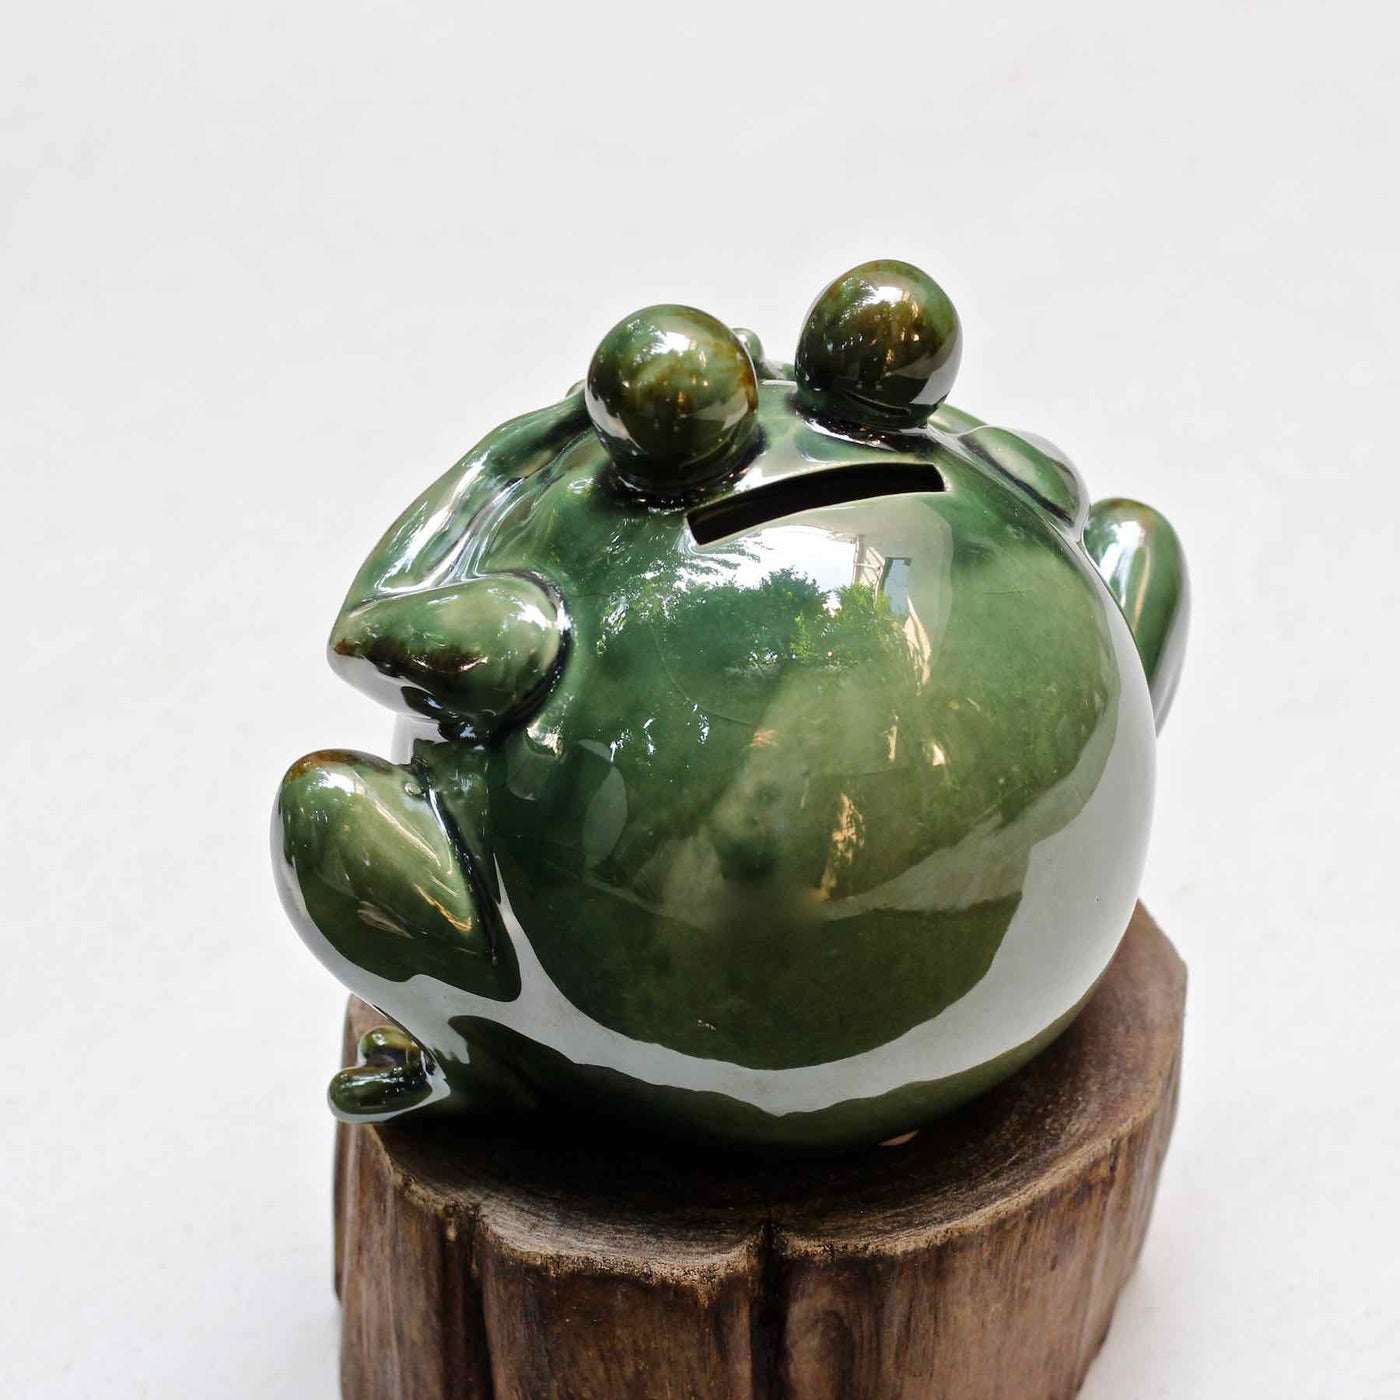 ceramic frog set showpiece for garden decor